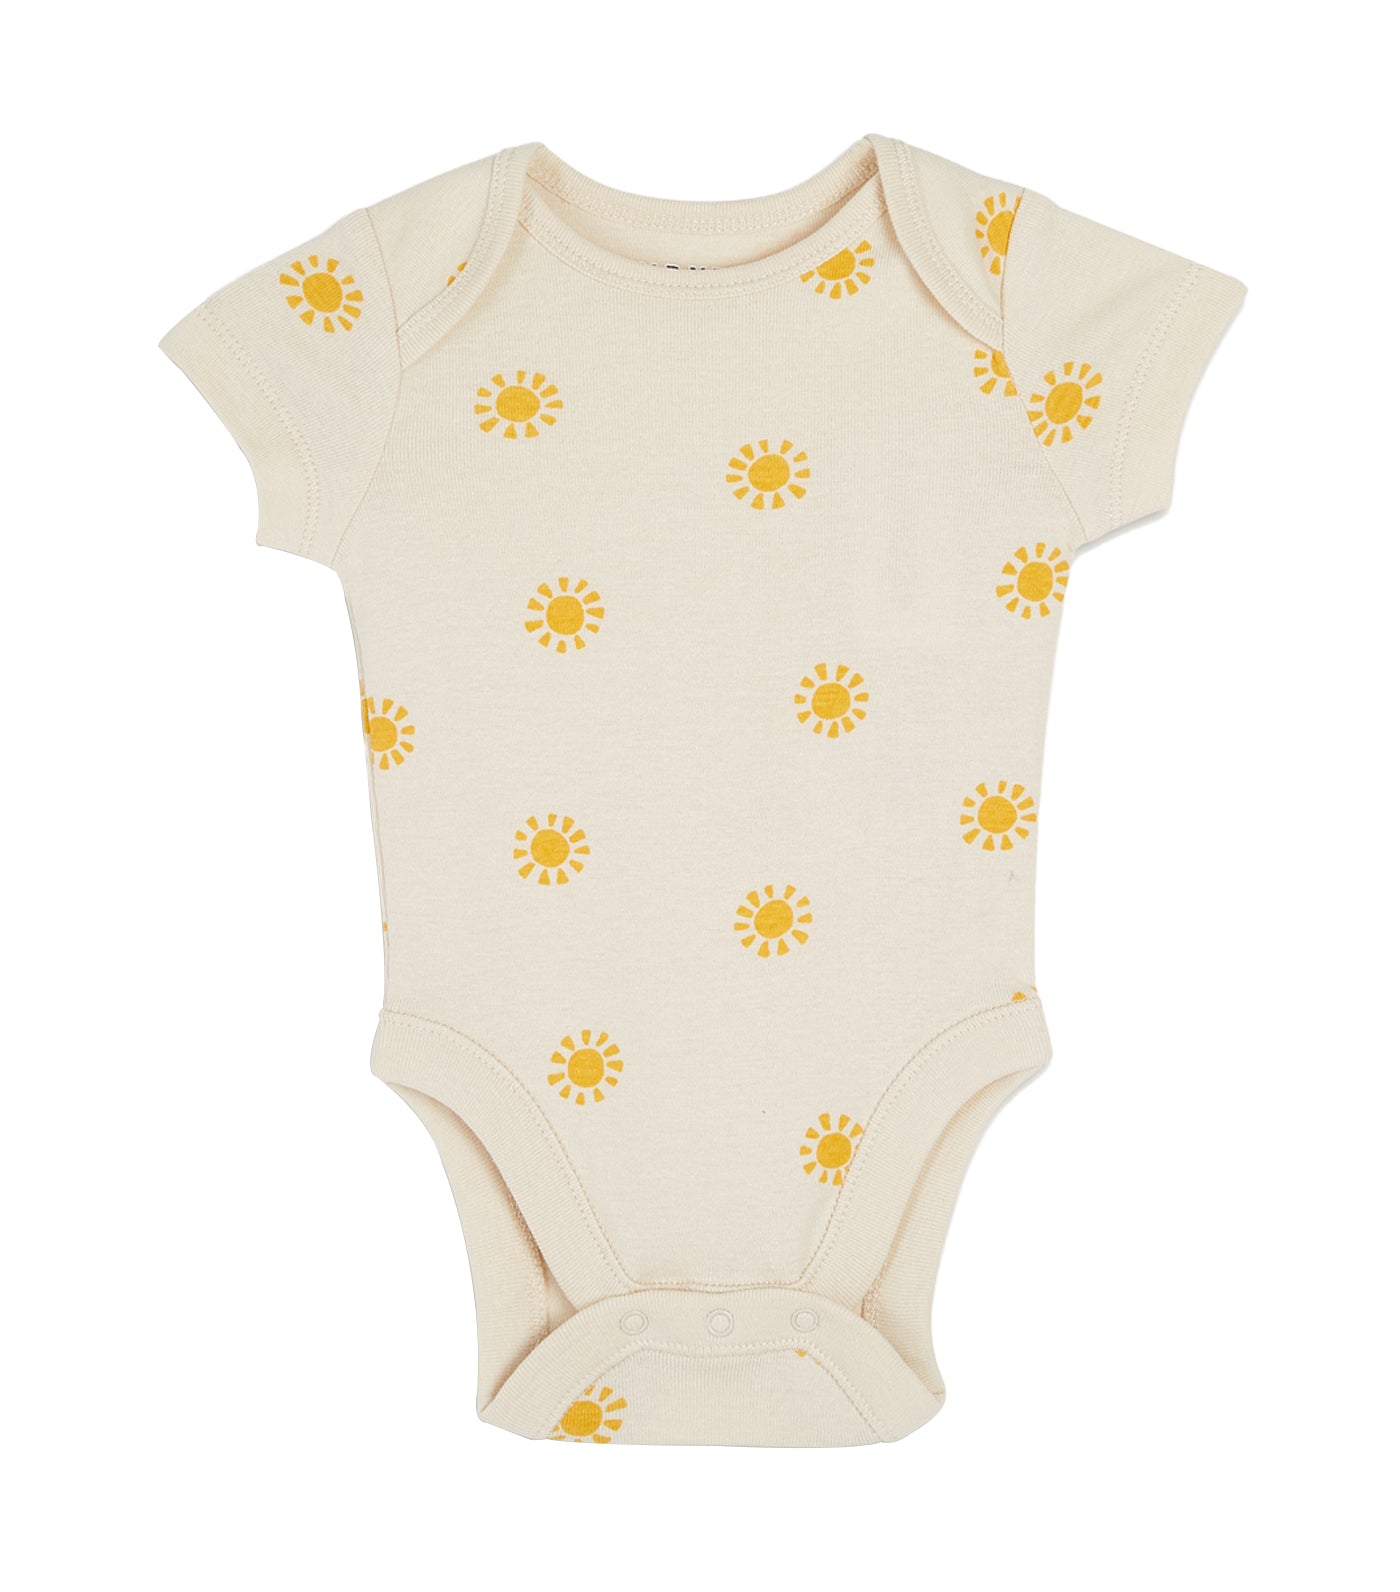 Unisex Short-Sleeve Sunny Printed Bodysuit for Baby Beige